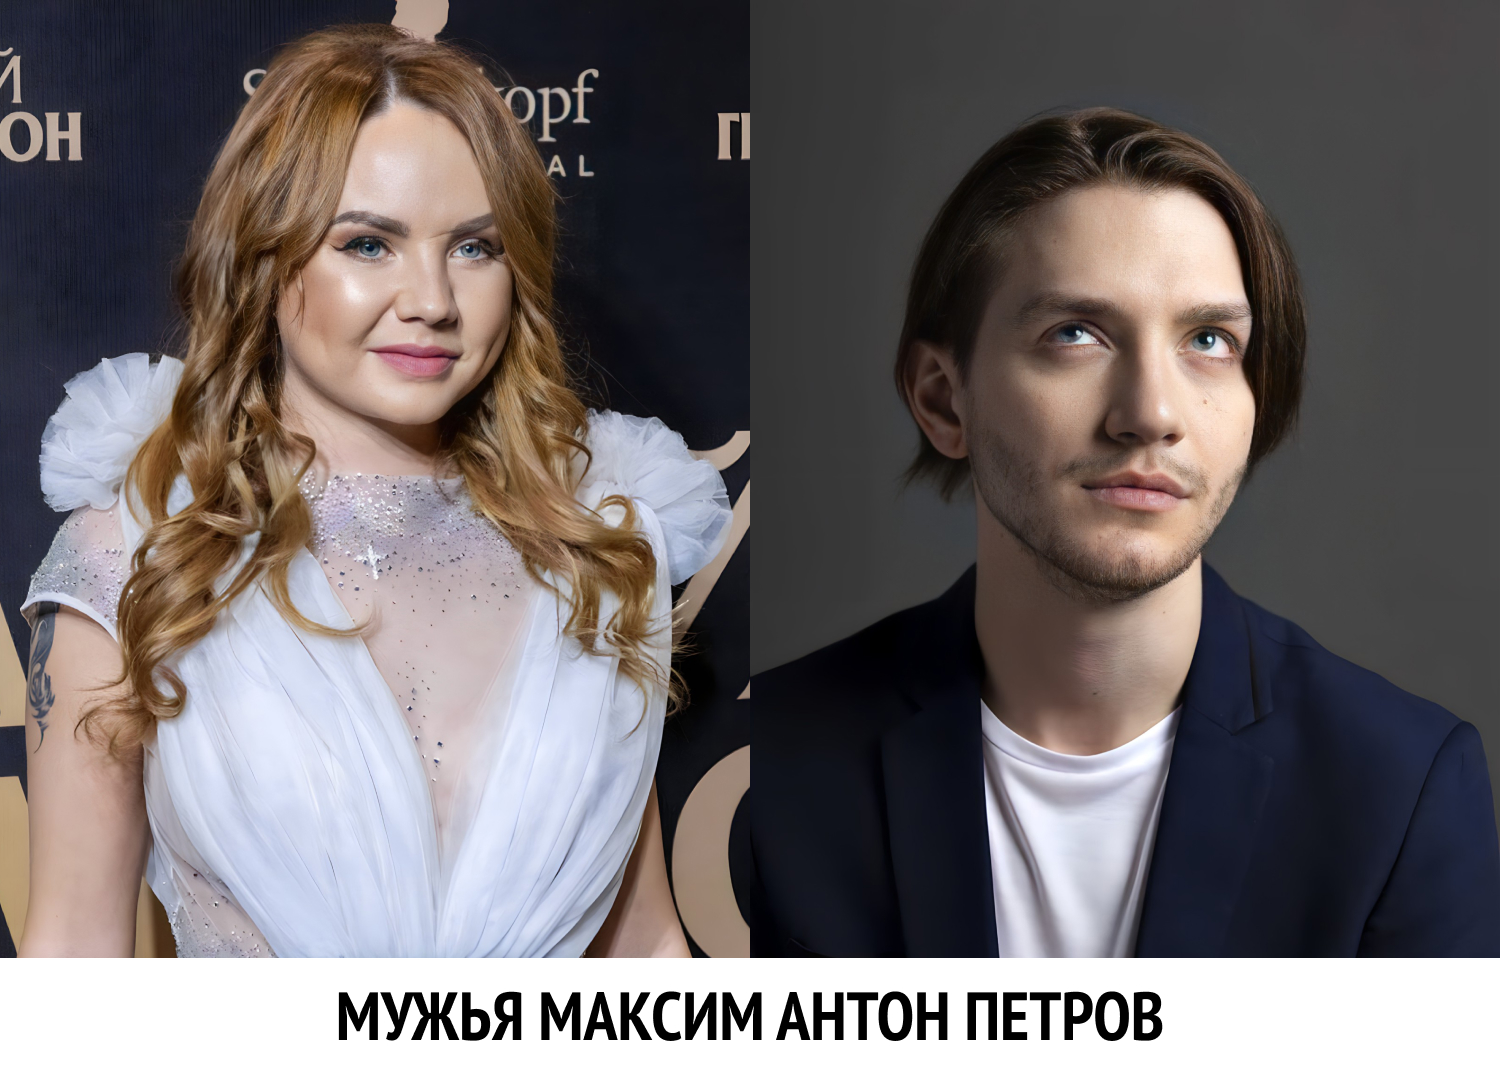 muzhya-Maksim-anton-petrov (18).jpg